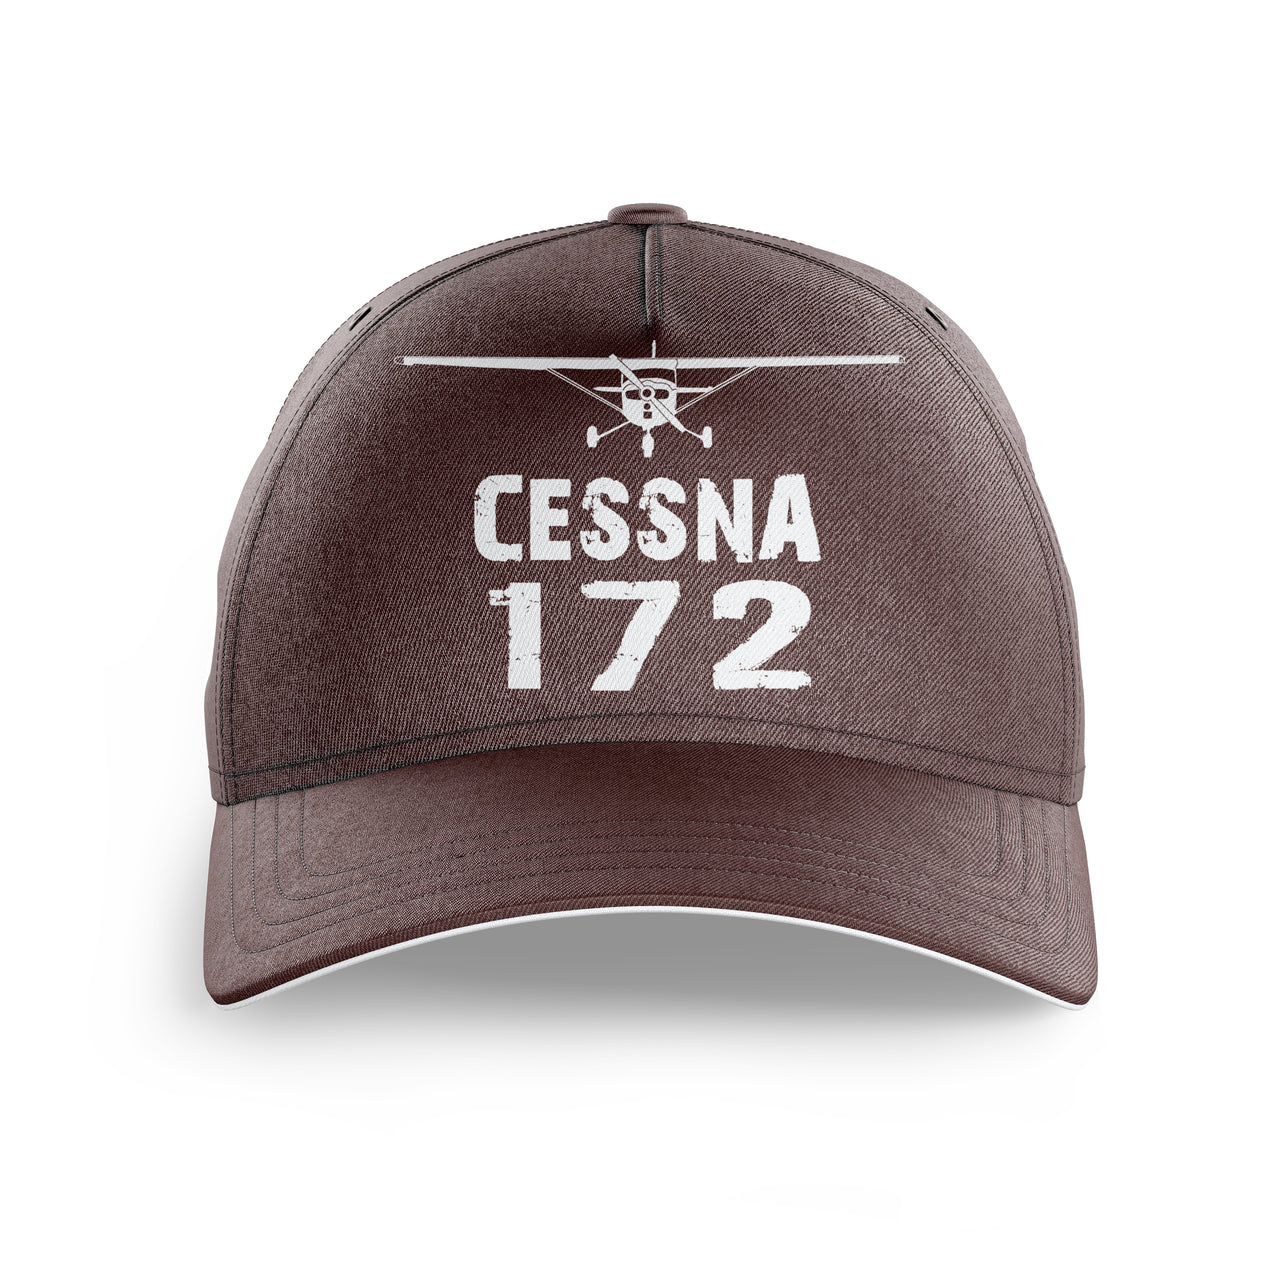 Cessna 172 & Plane Printed Hats